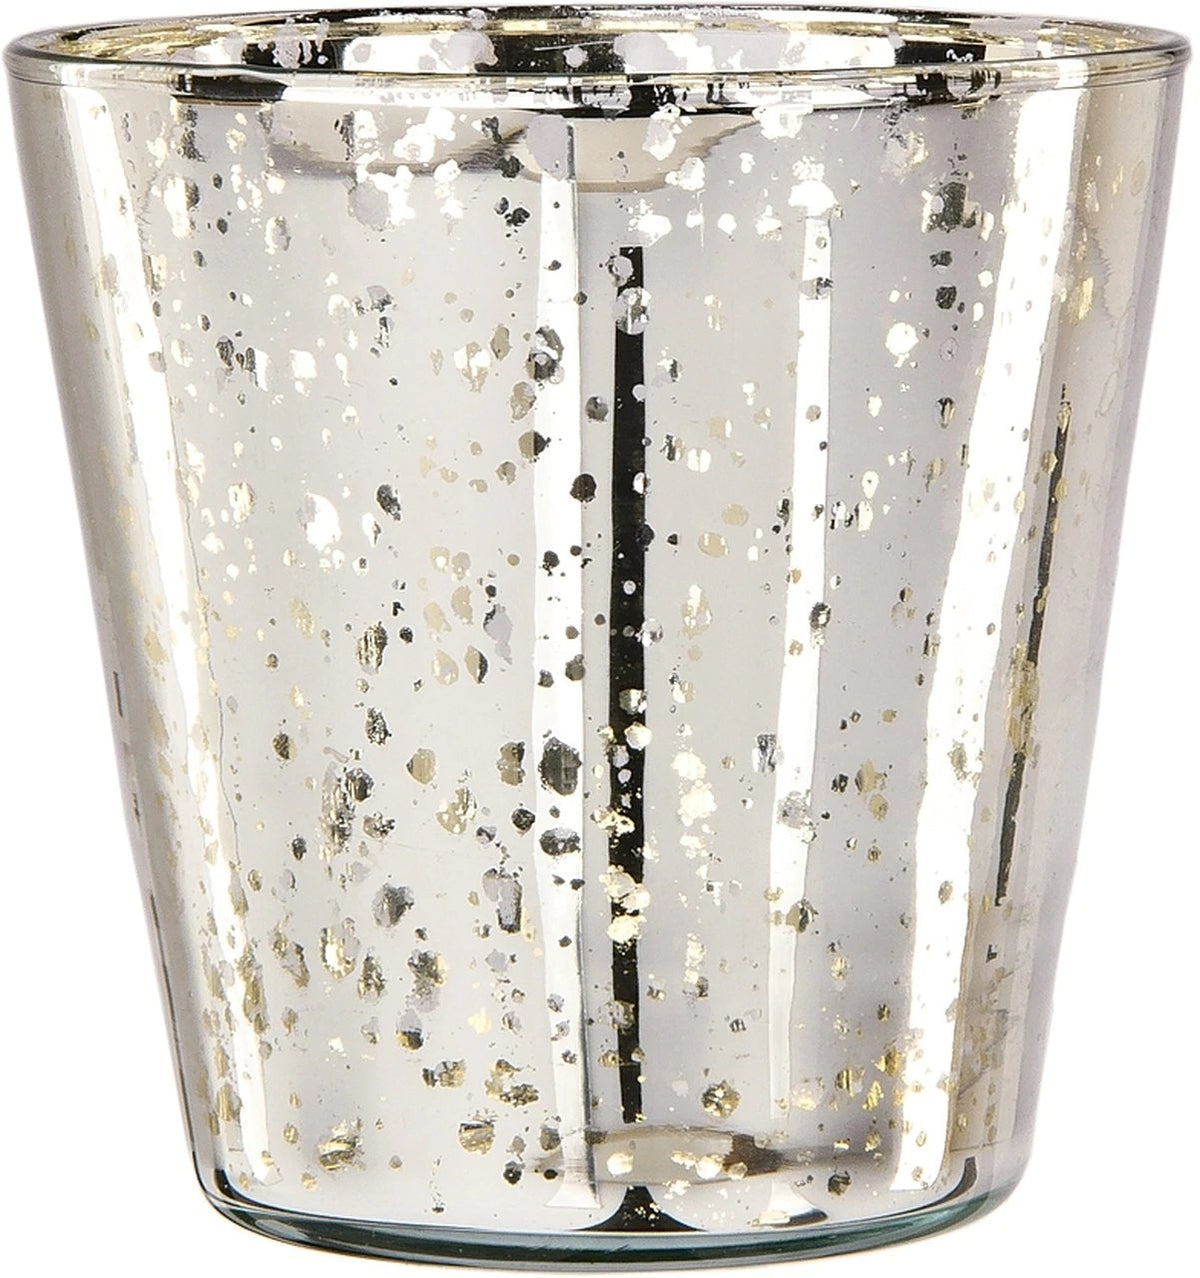 CLOSEOUT Vintage Mercury Glass Candle Holder (4-Inch, Jenna Design Cup, Silver) - Decorative Candle Holder - Home Decor, Party Decor and Wedding Centerpieces - Luna Bazaar | Boho &amp; Vintage Style Decor